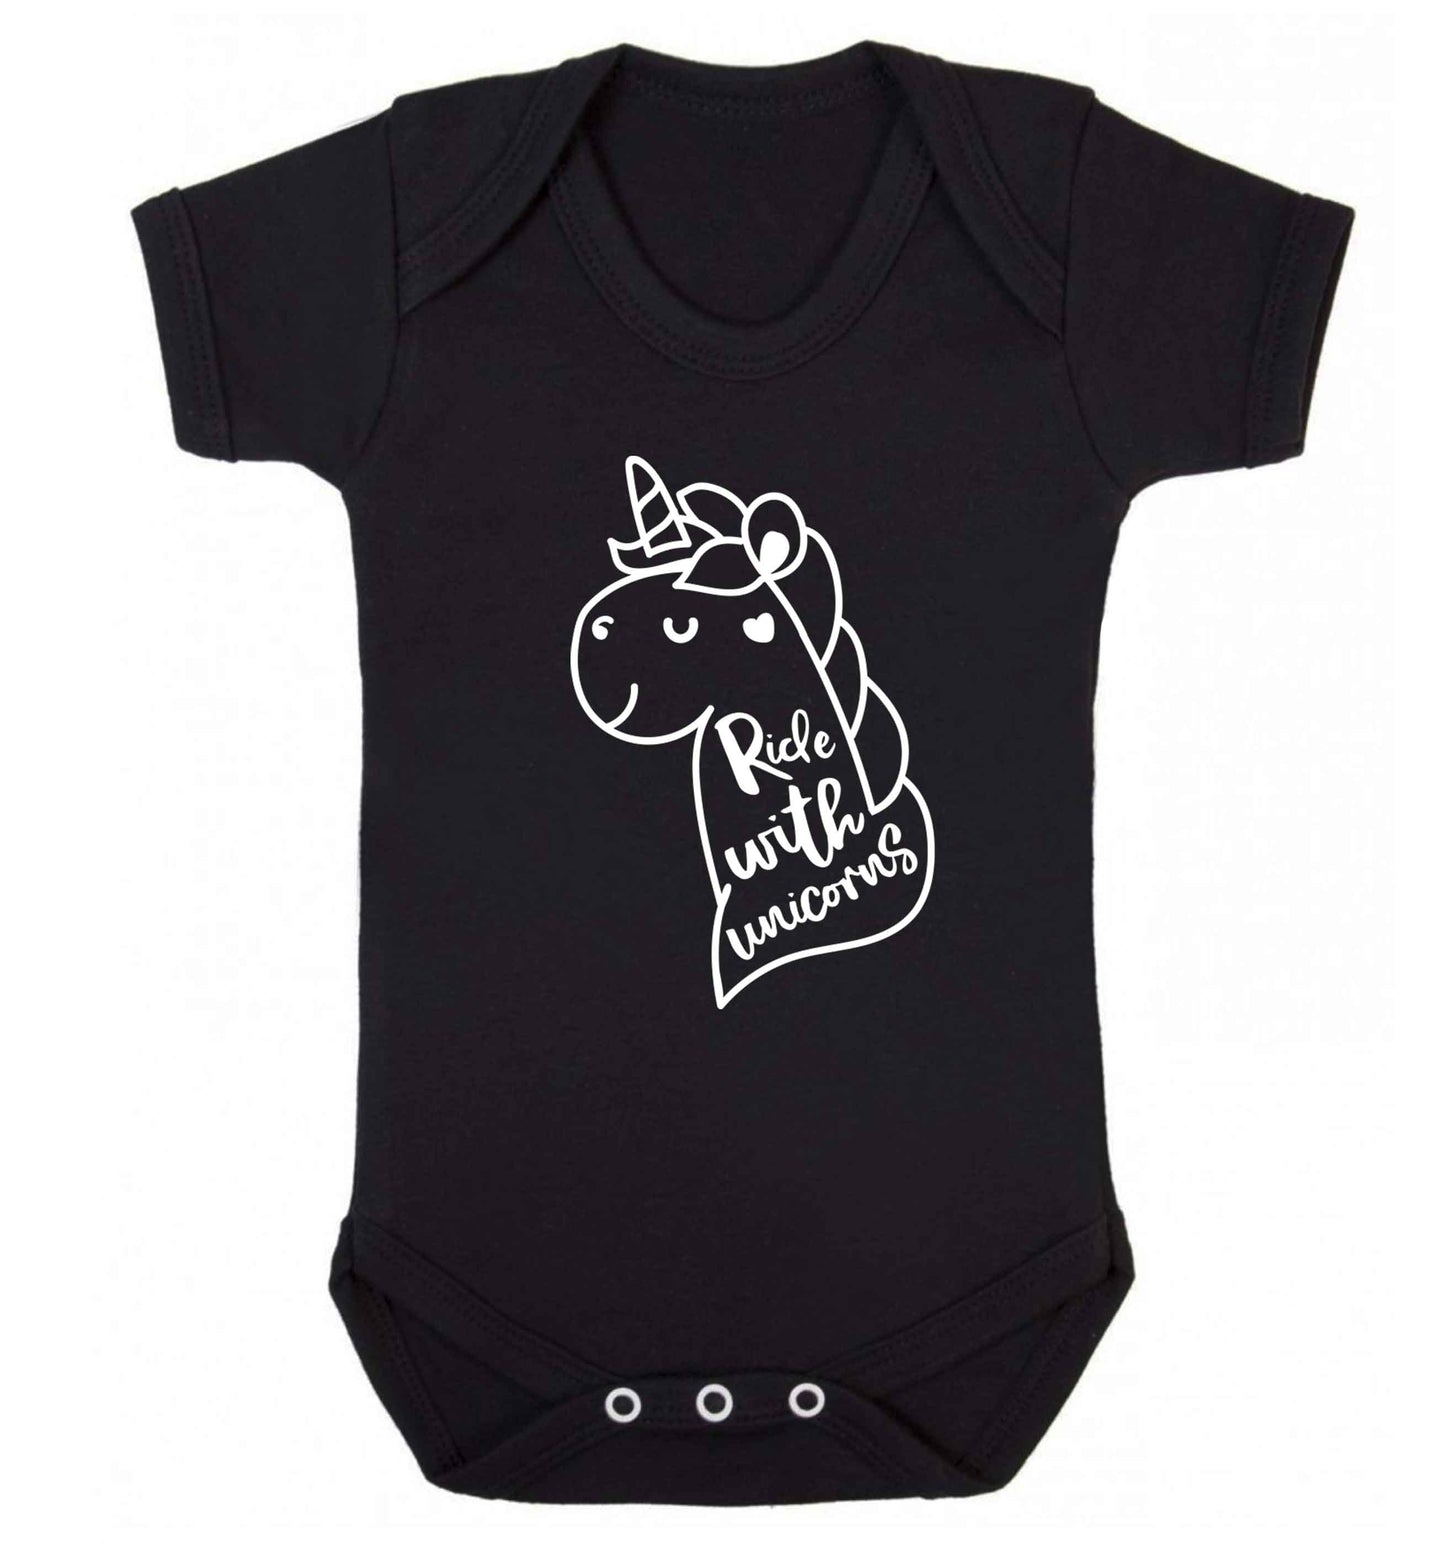 Ride with unicorns Baby Vest black 18-24 months